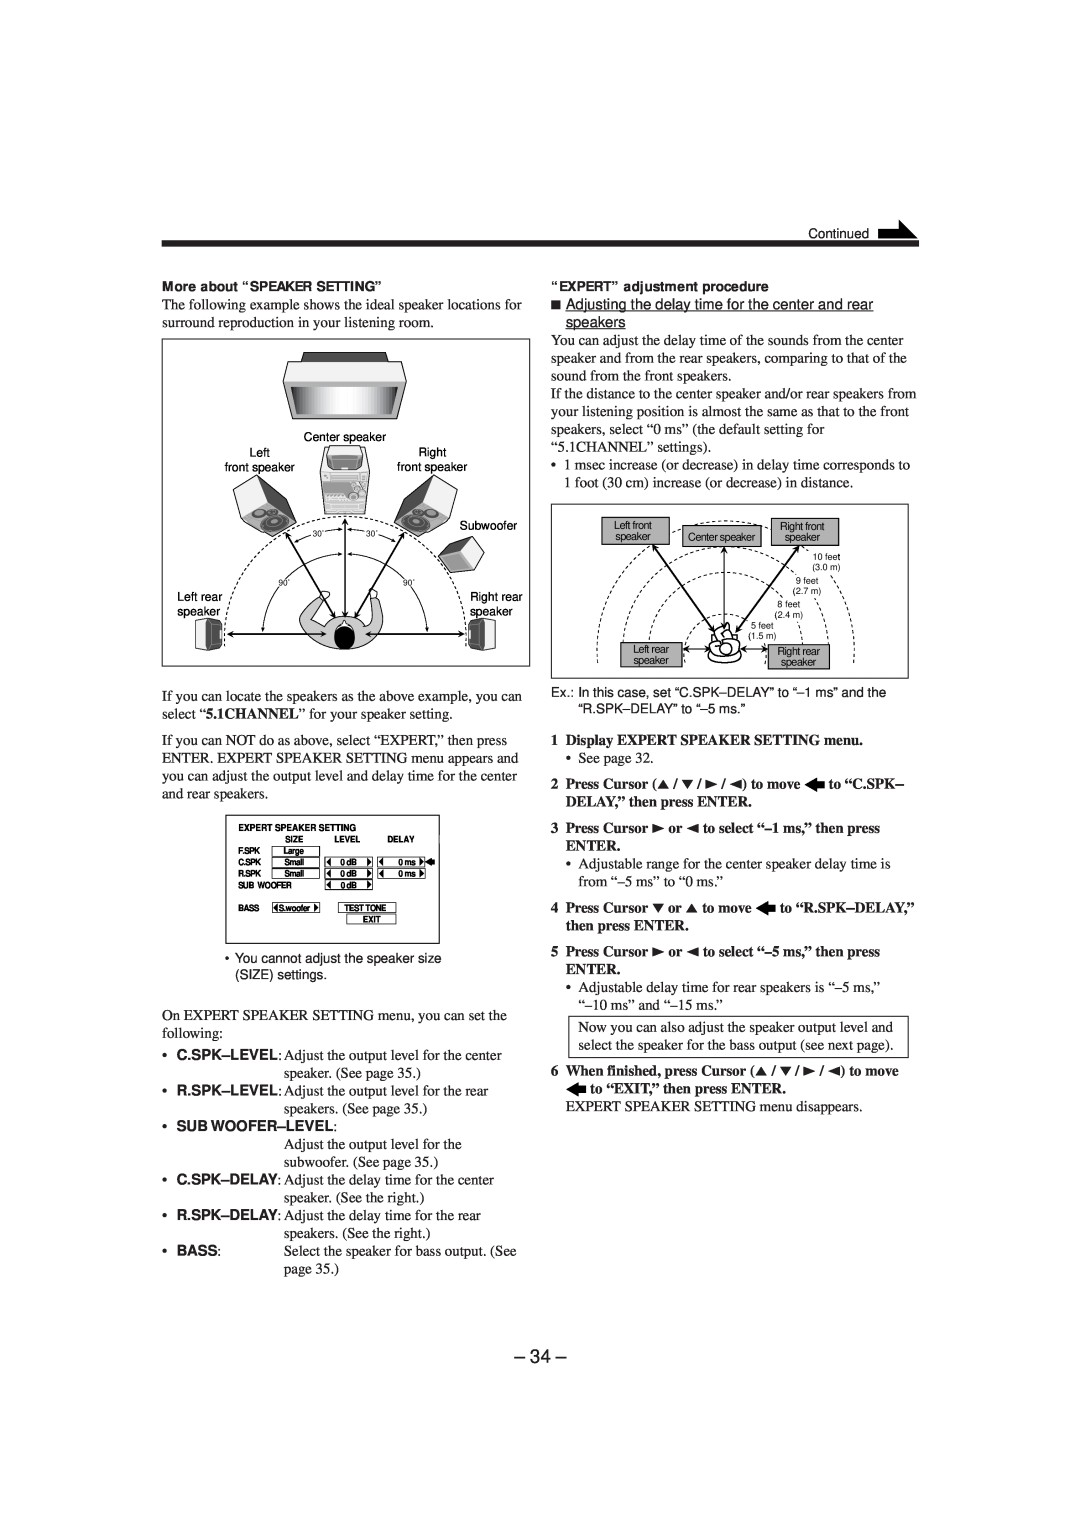 JVC MX-DVA9 manual 34, More about “SPEAKER SETTING”, “EXPERT” adjustment procedure, •Sub Woofer–Level, to “C.SPK, Enter 